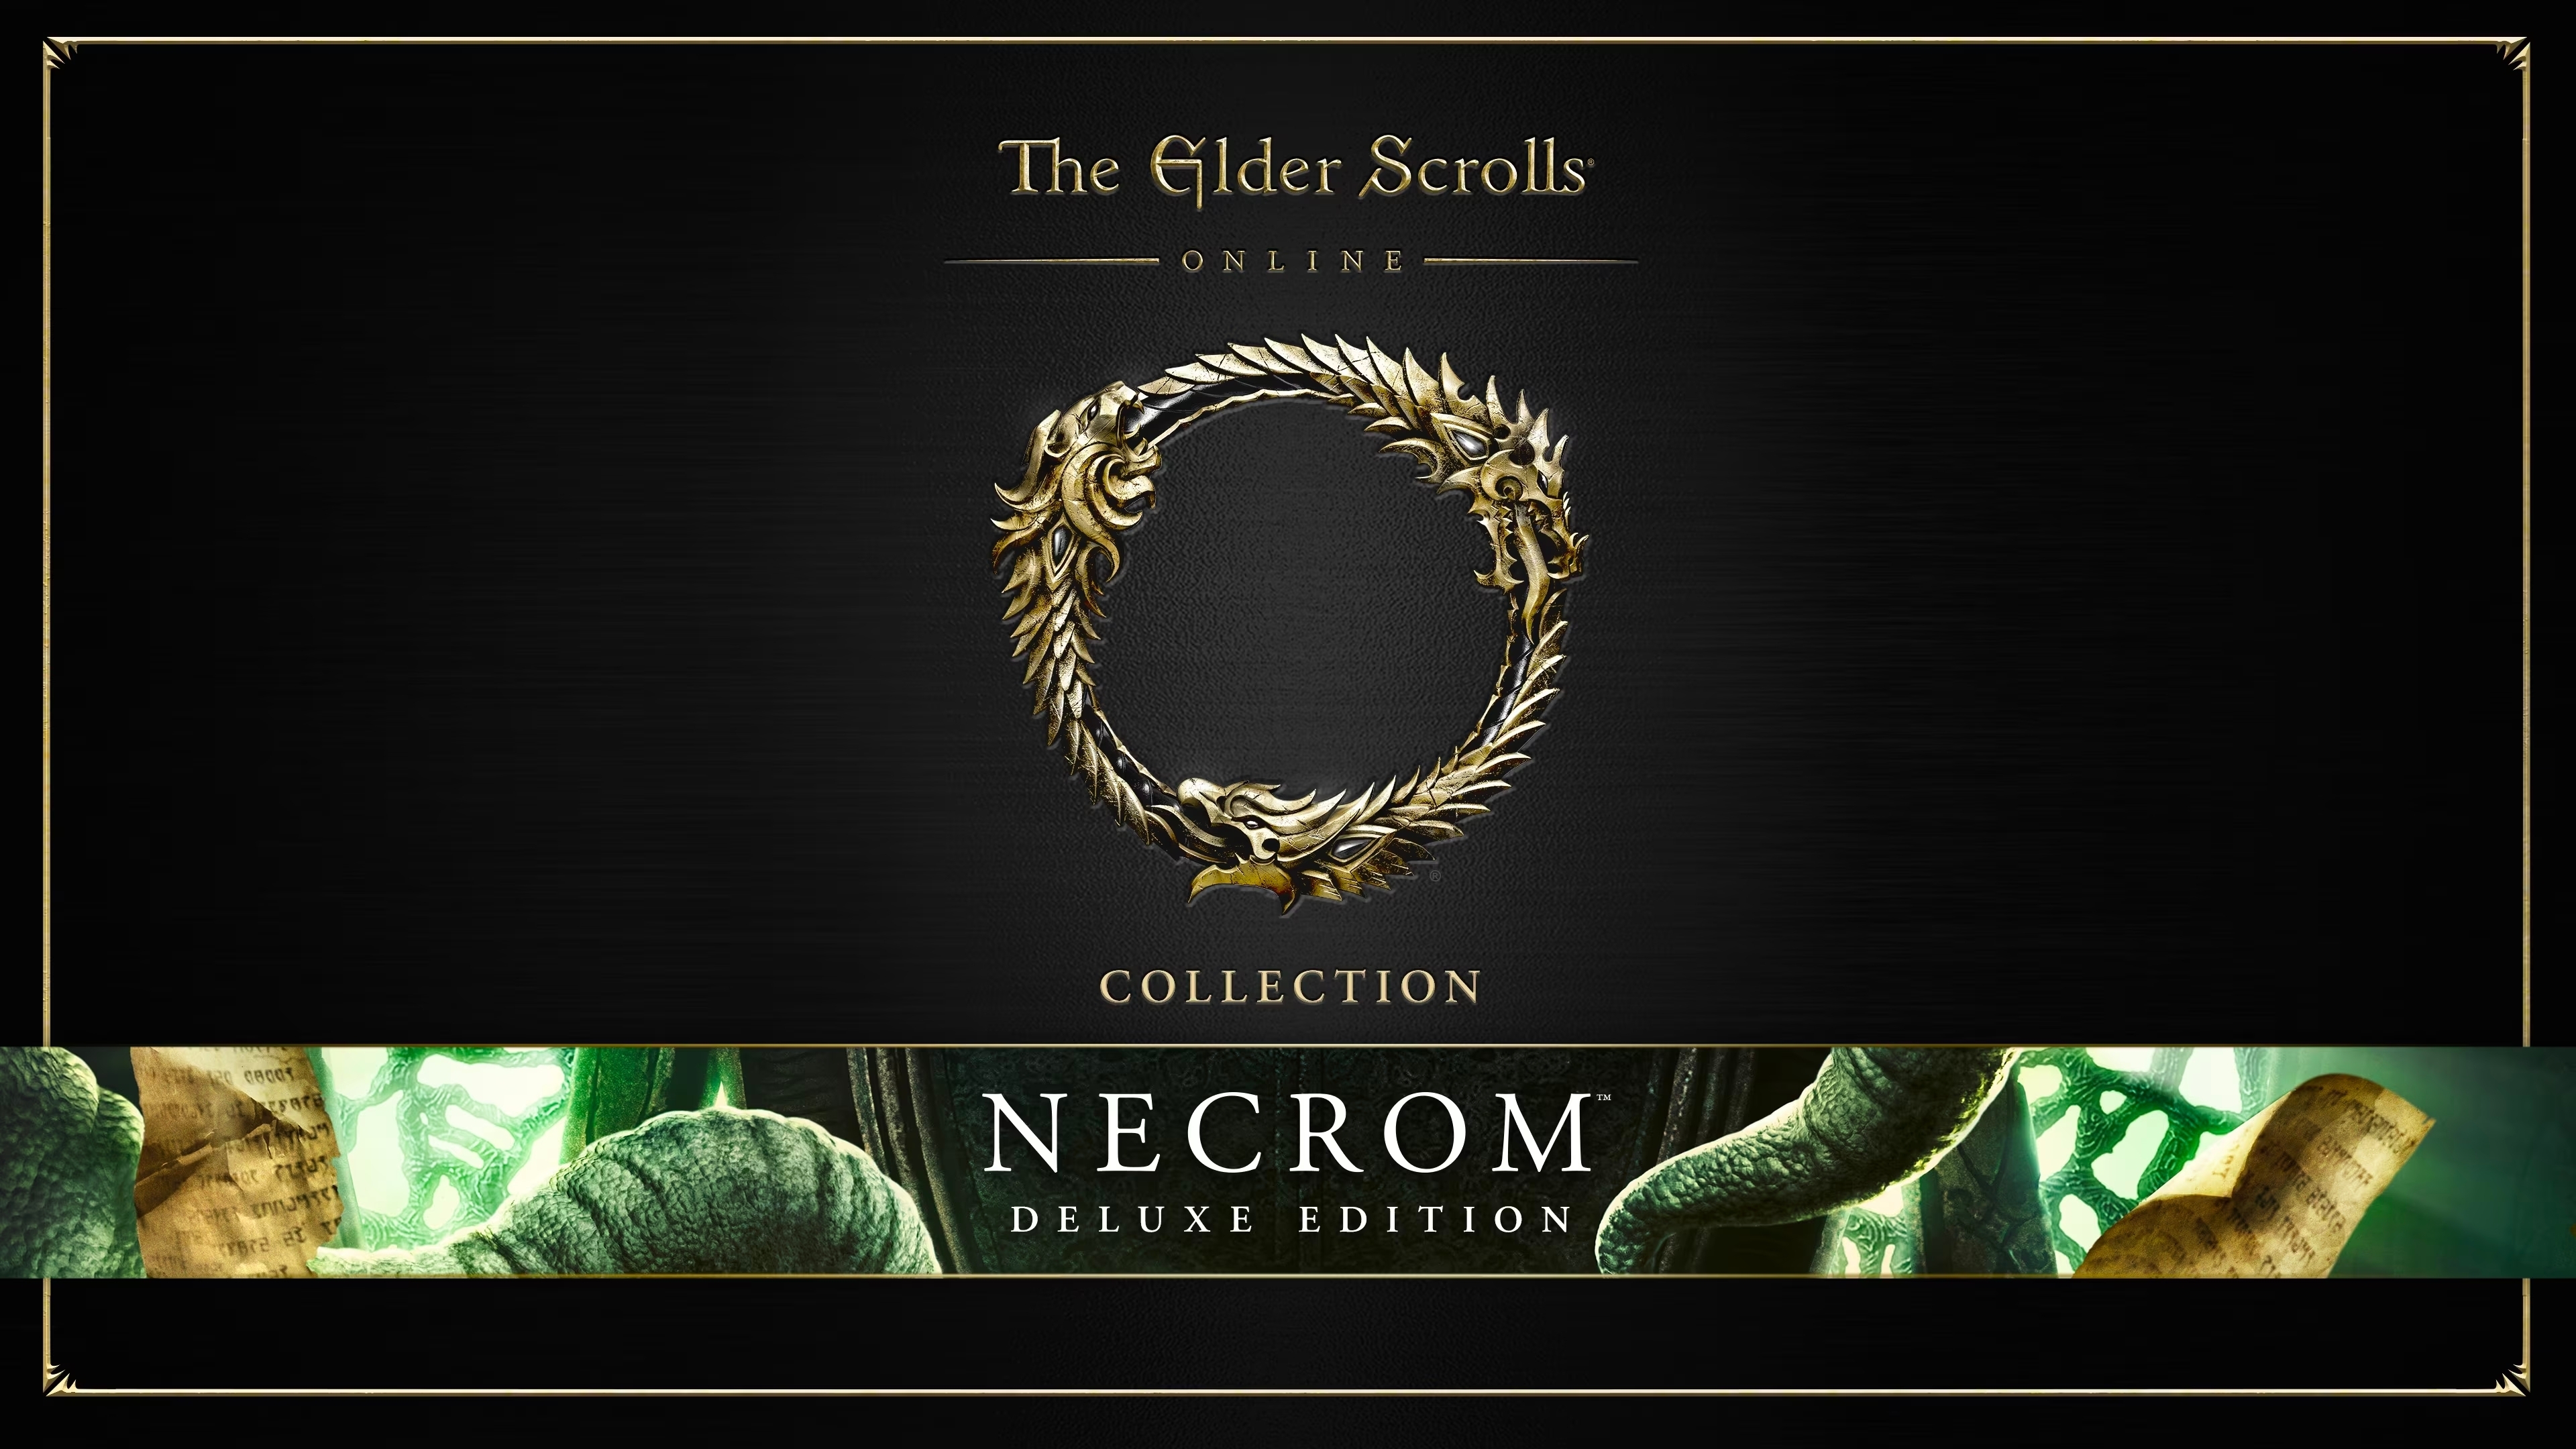 Comprar The Elder Scrolls IV: Oblivion GOTY Deluxe Edition Steam